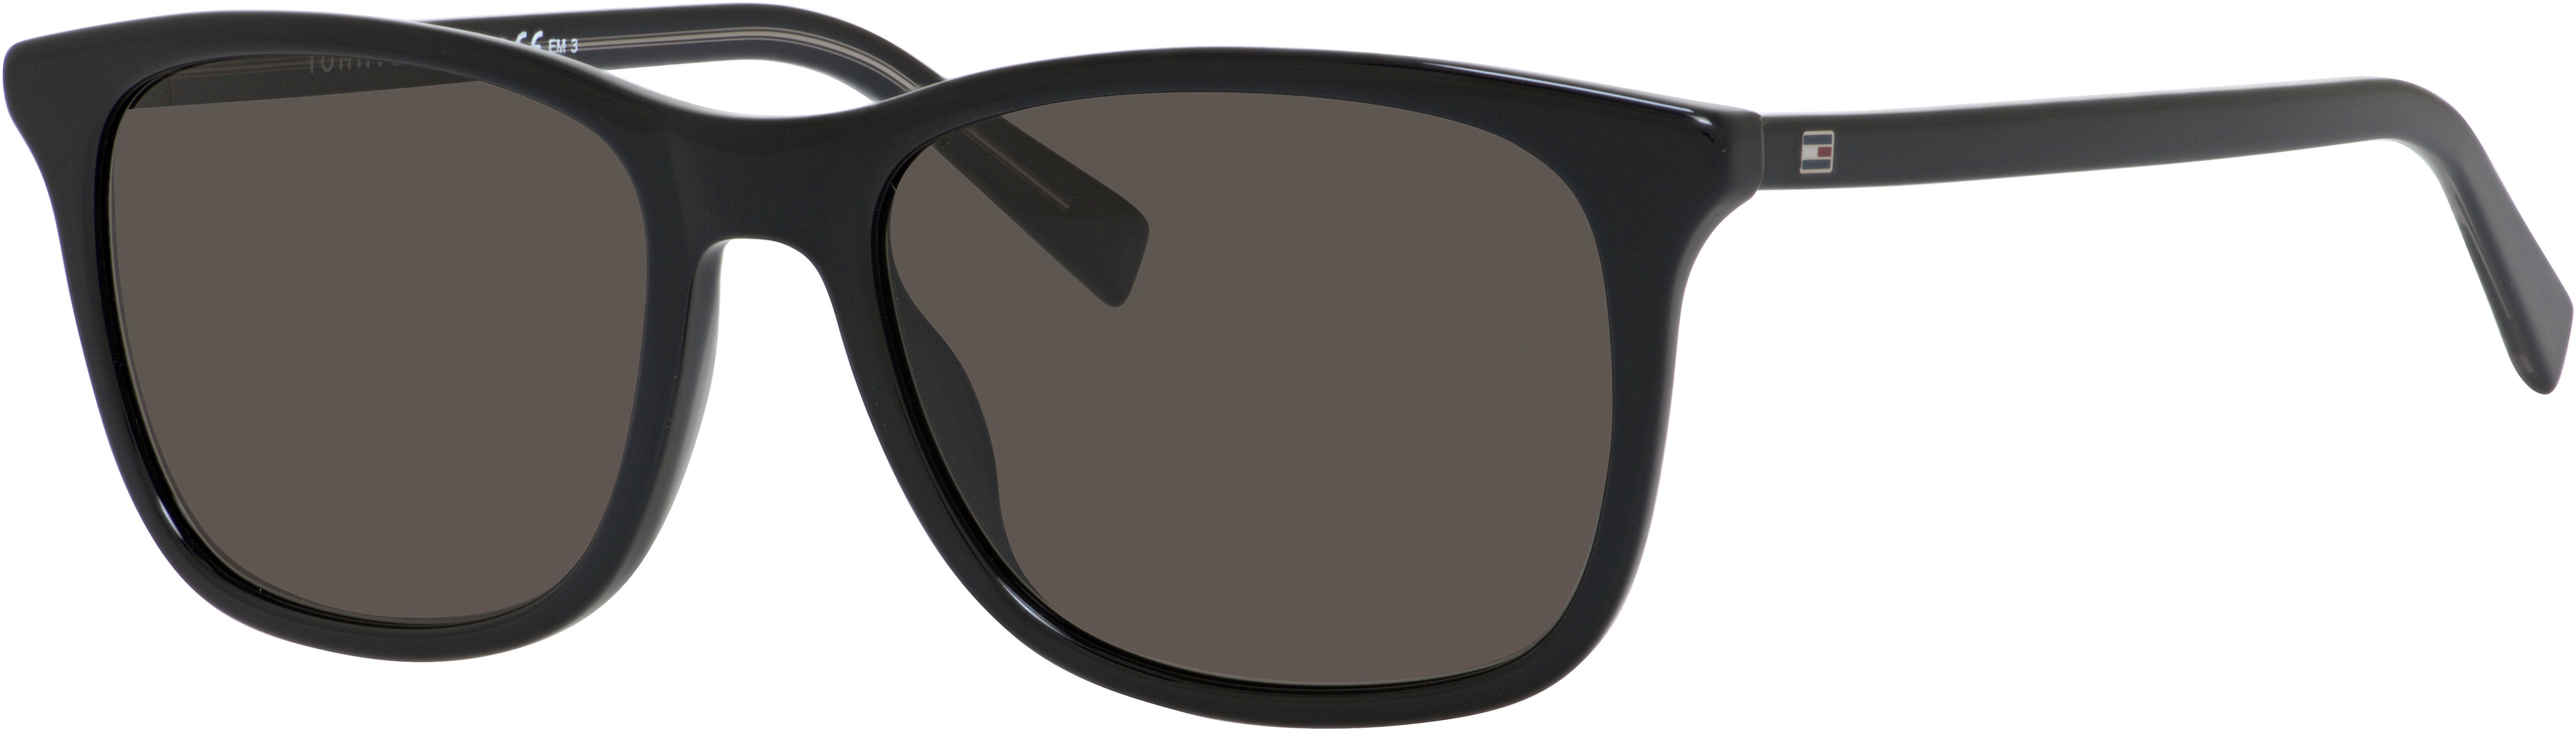 Tommy Hilfiger T. Hilfiger 1449/S Rectangular Sunglasses 0A5X-0A5X  Black Gray (NR Brown Gray)